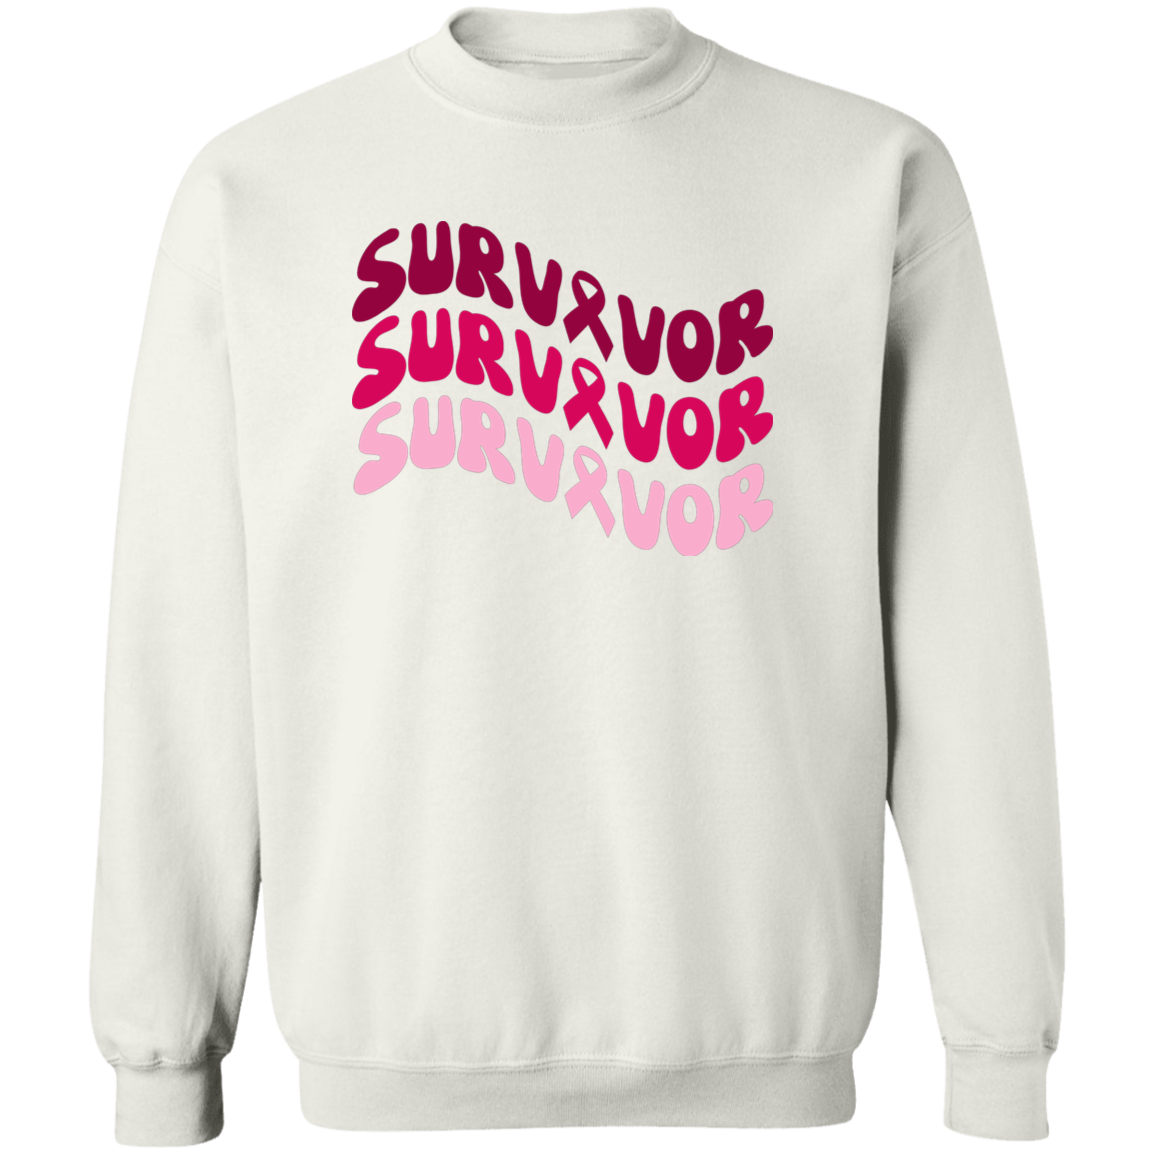 Survivor Retro Sweatshirt